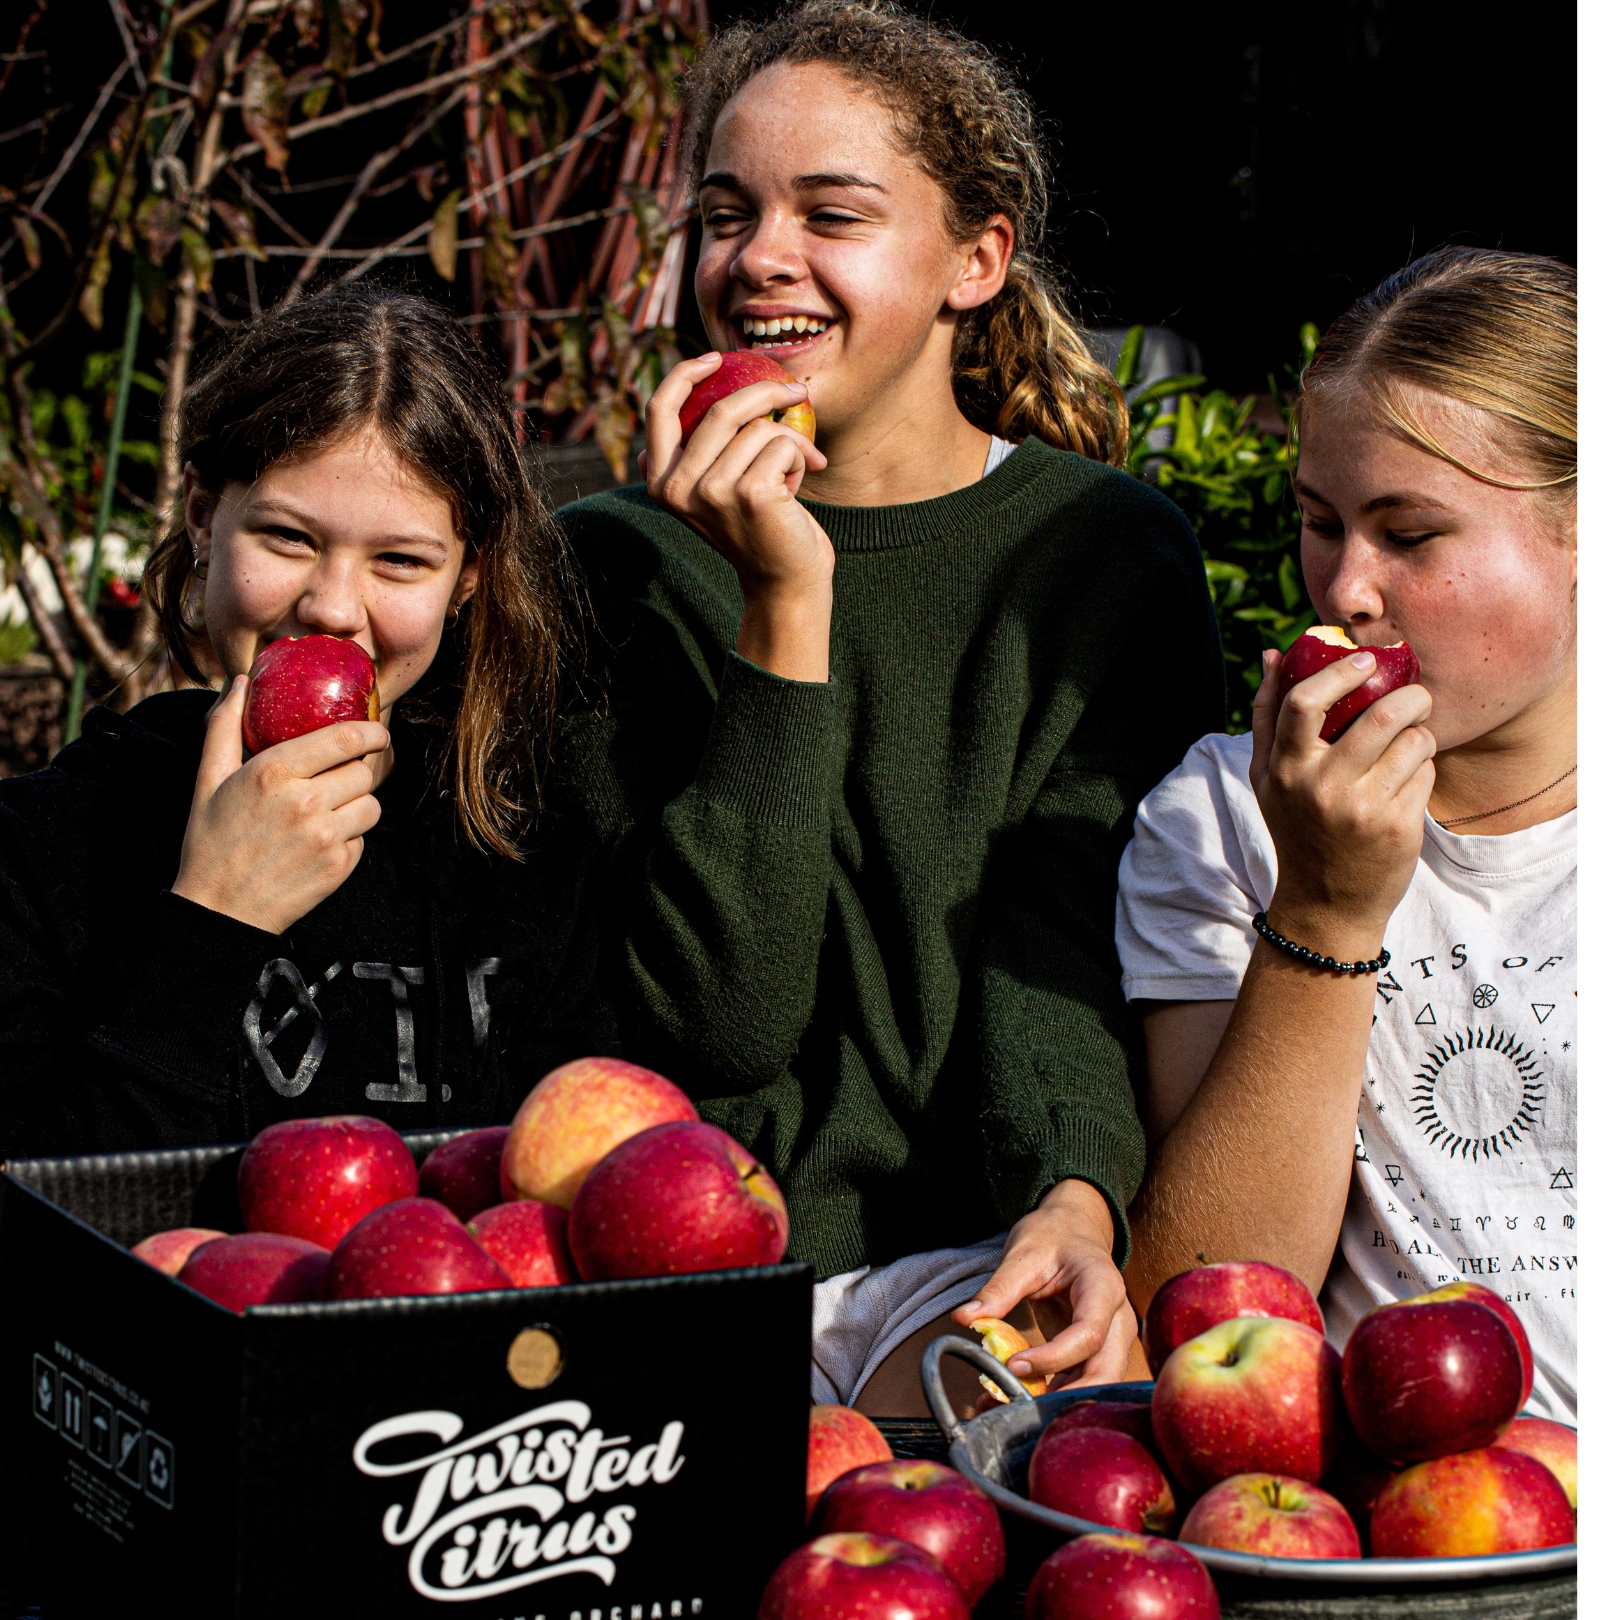 Buy Apples - Royal Gala Online NZ